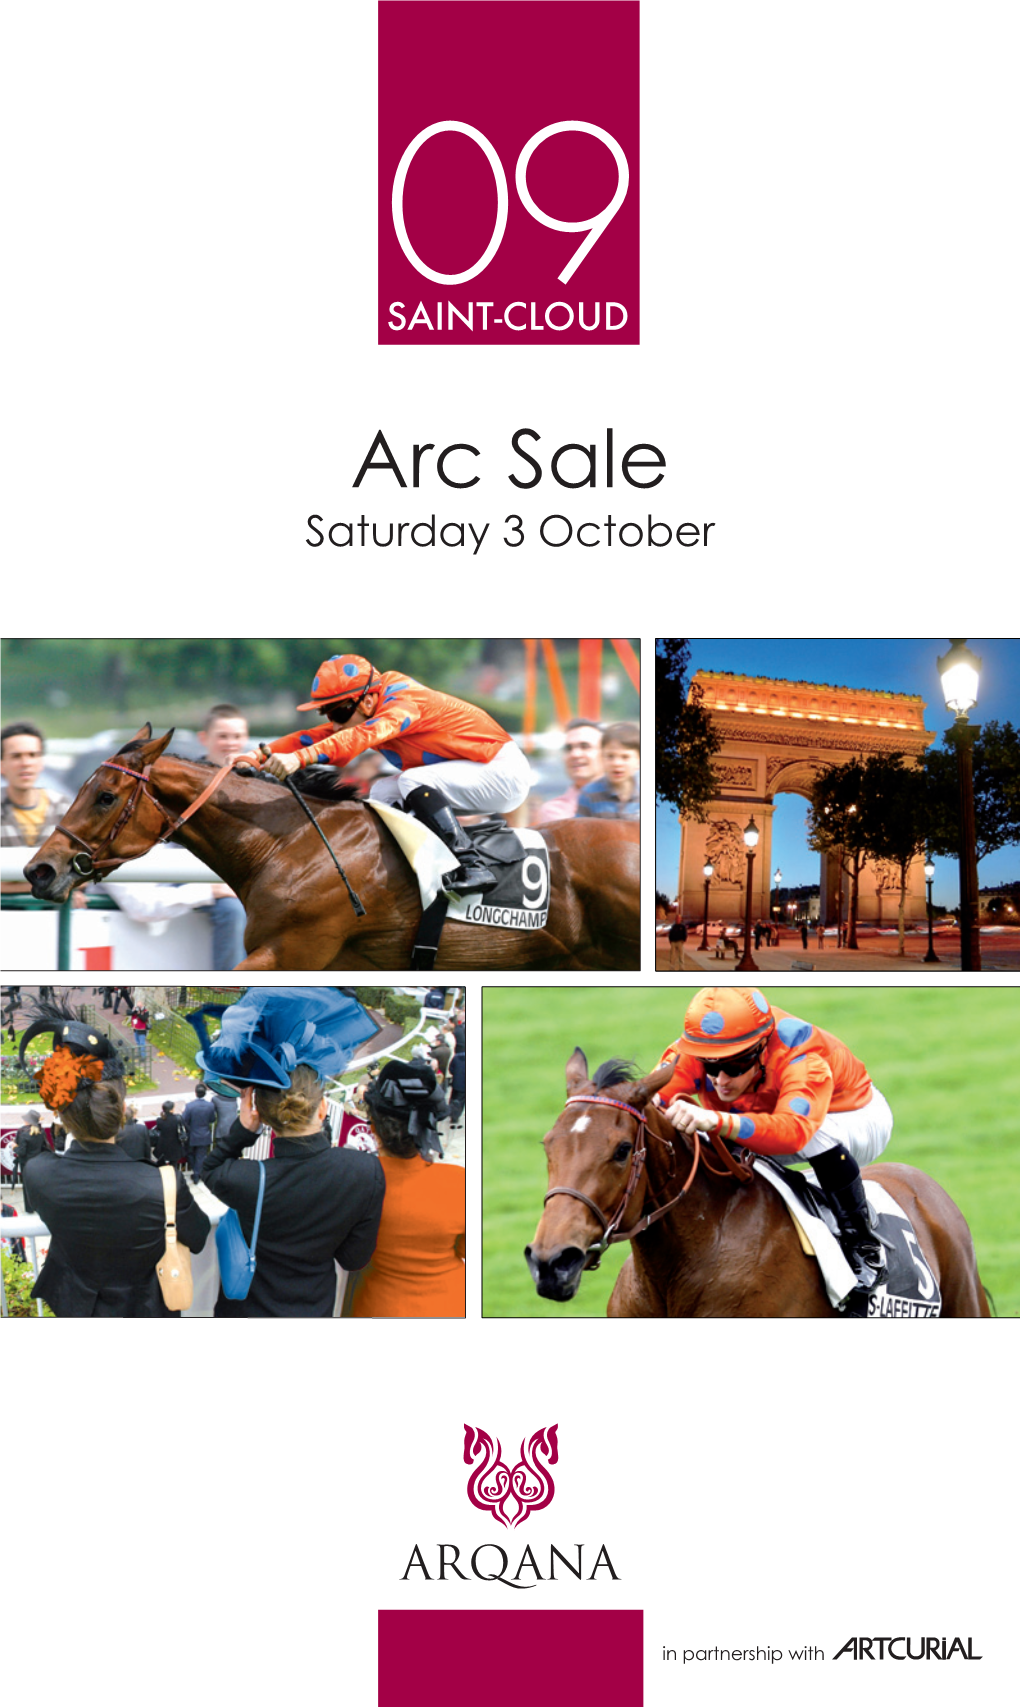 Arc Sale October 9 Saturday 3October Arc Sale 09 Saint-Cloud in Partnership with Liste Vendeurs 10 09 9/09/09 9:28 Page 71